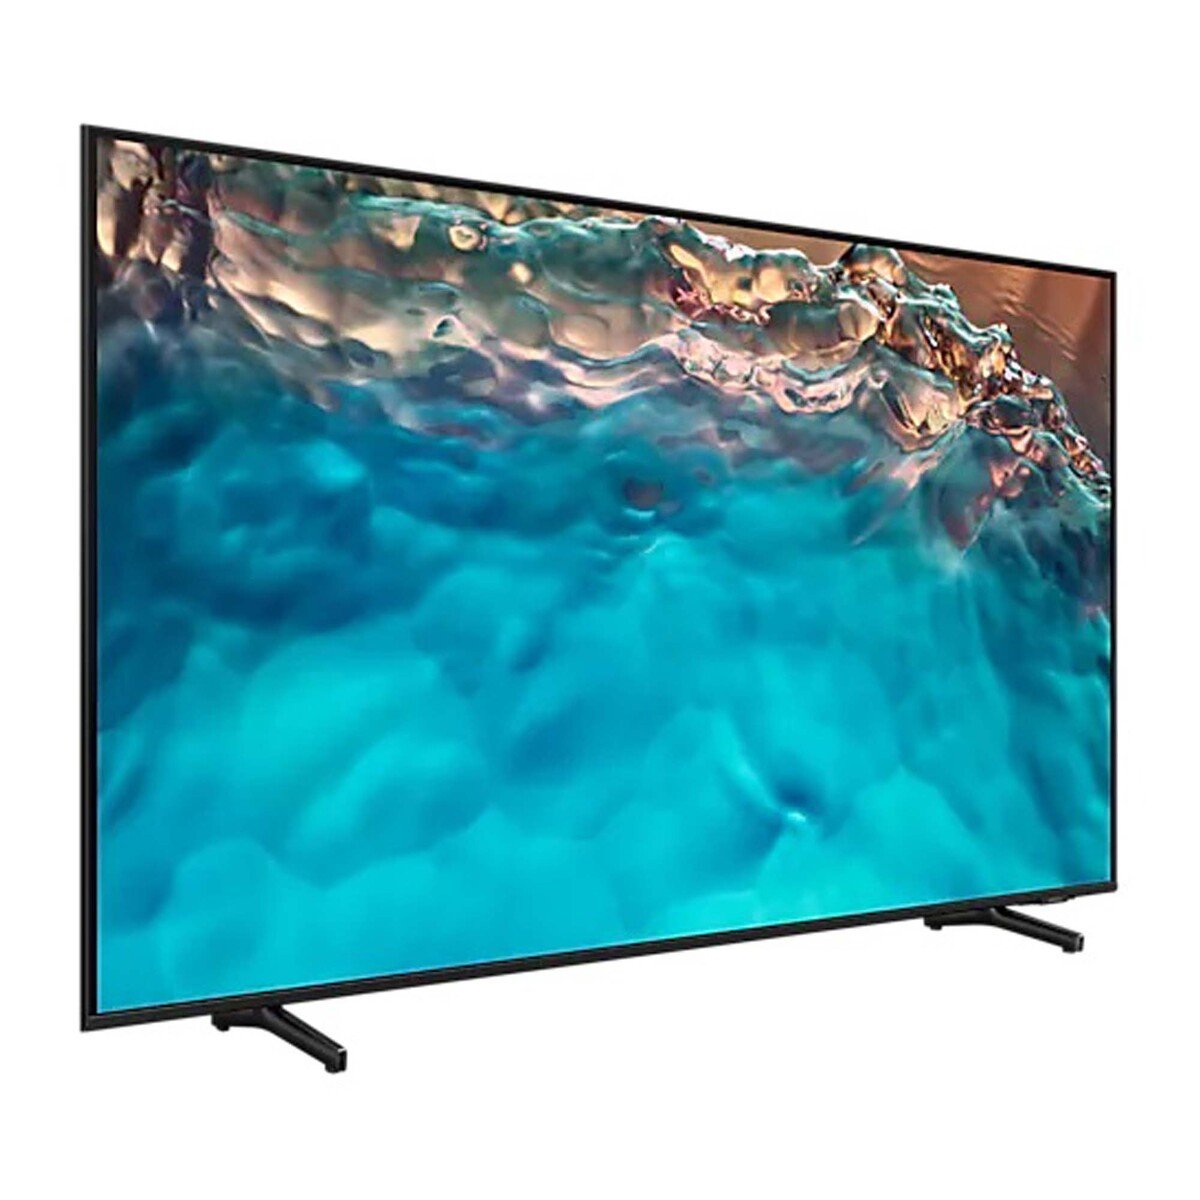 Samsung 85 inches Crystal 4K UHD Smart LED TV, Black, UA85BU8000UXZN